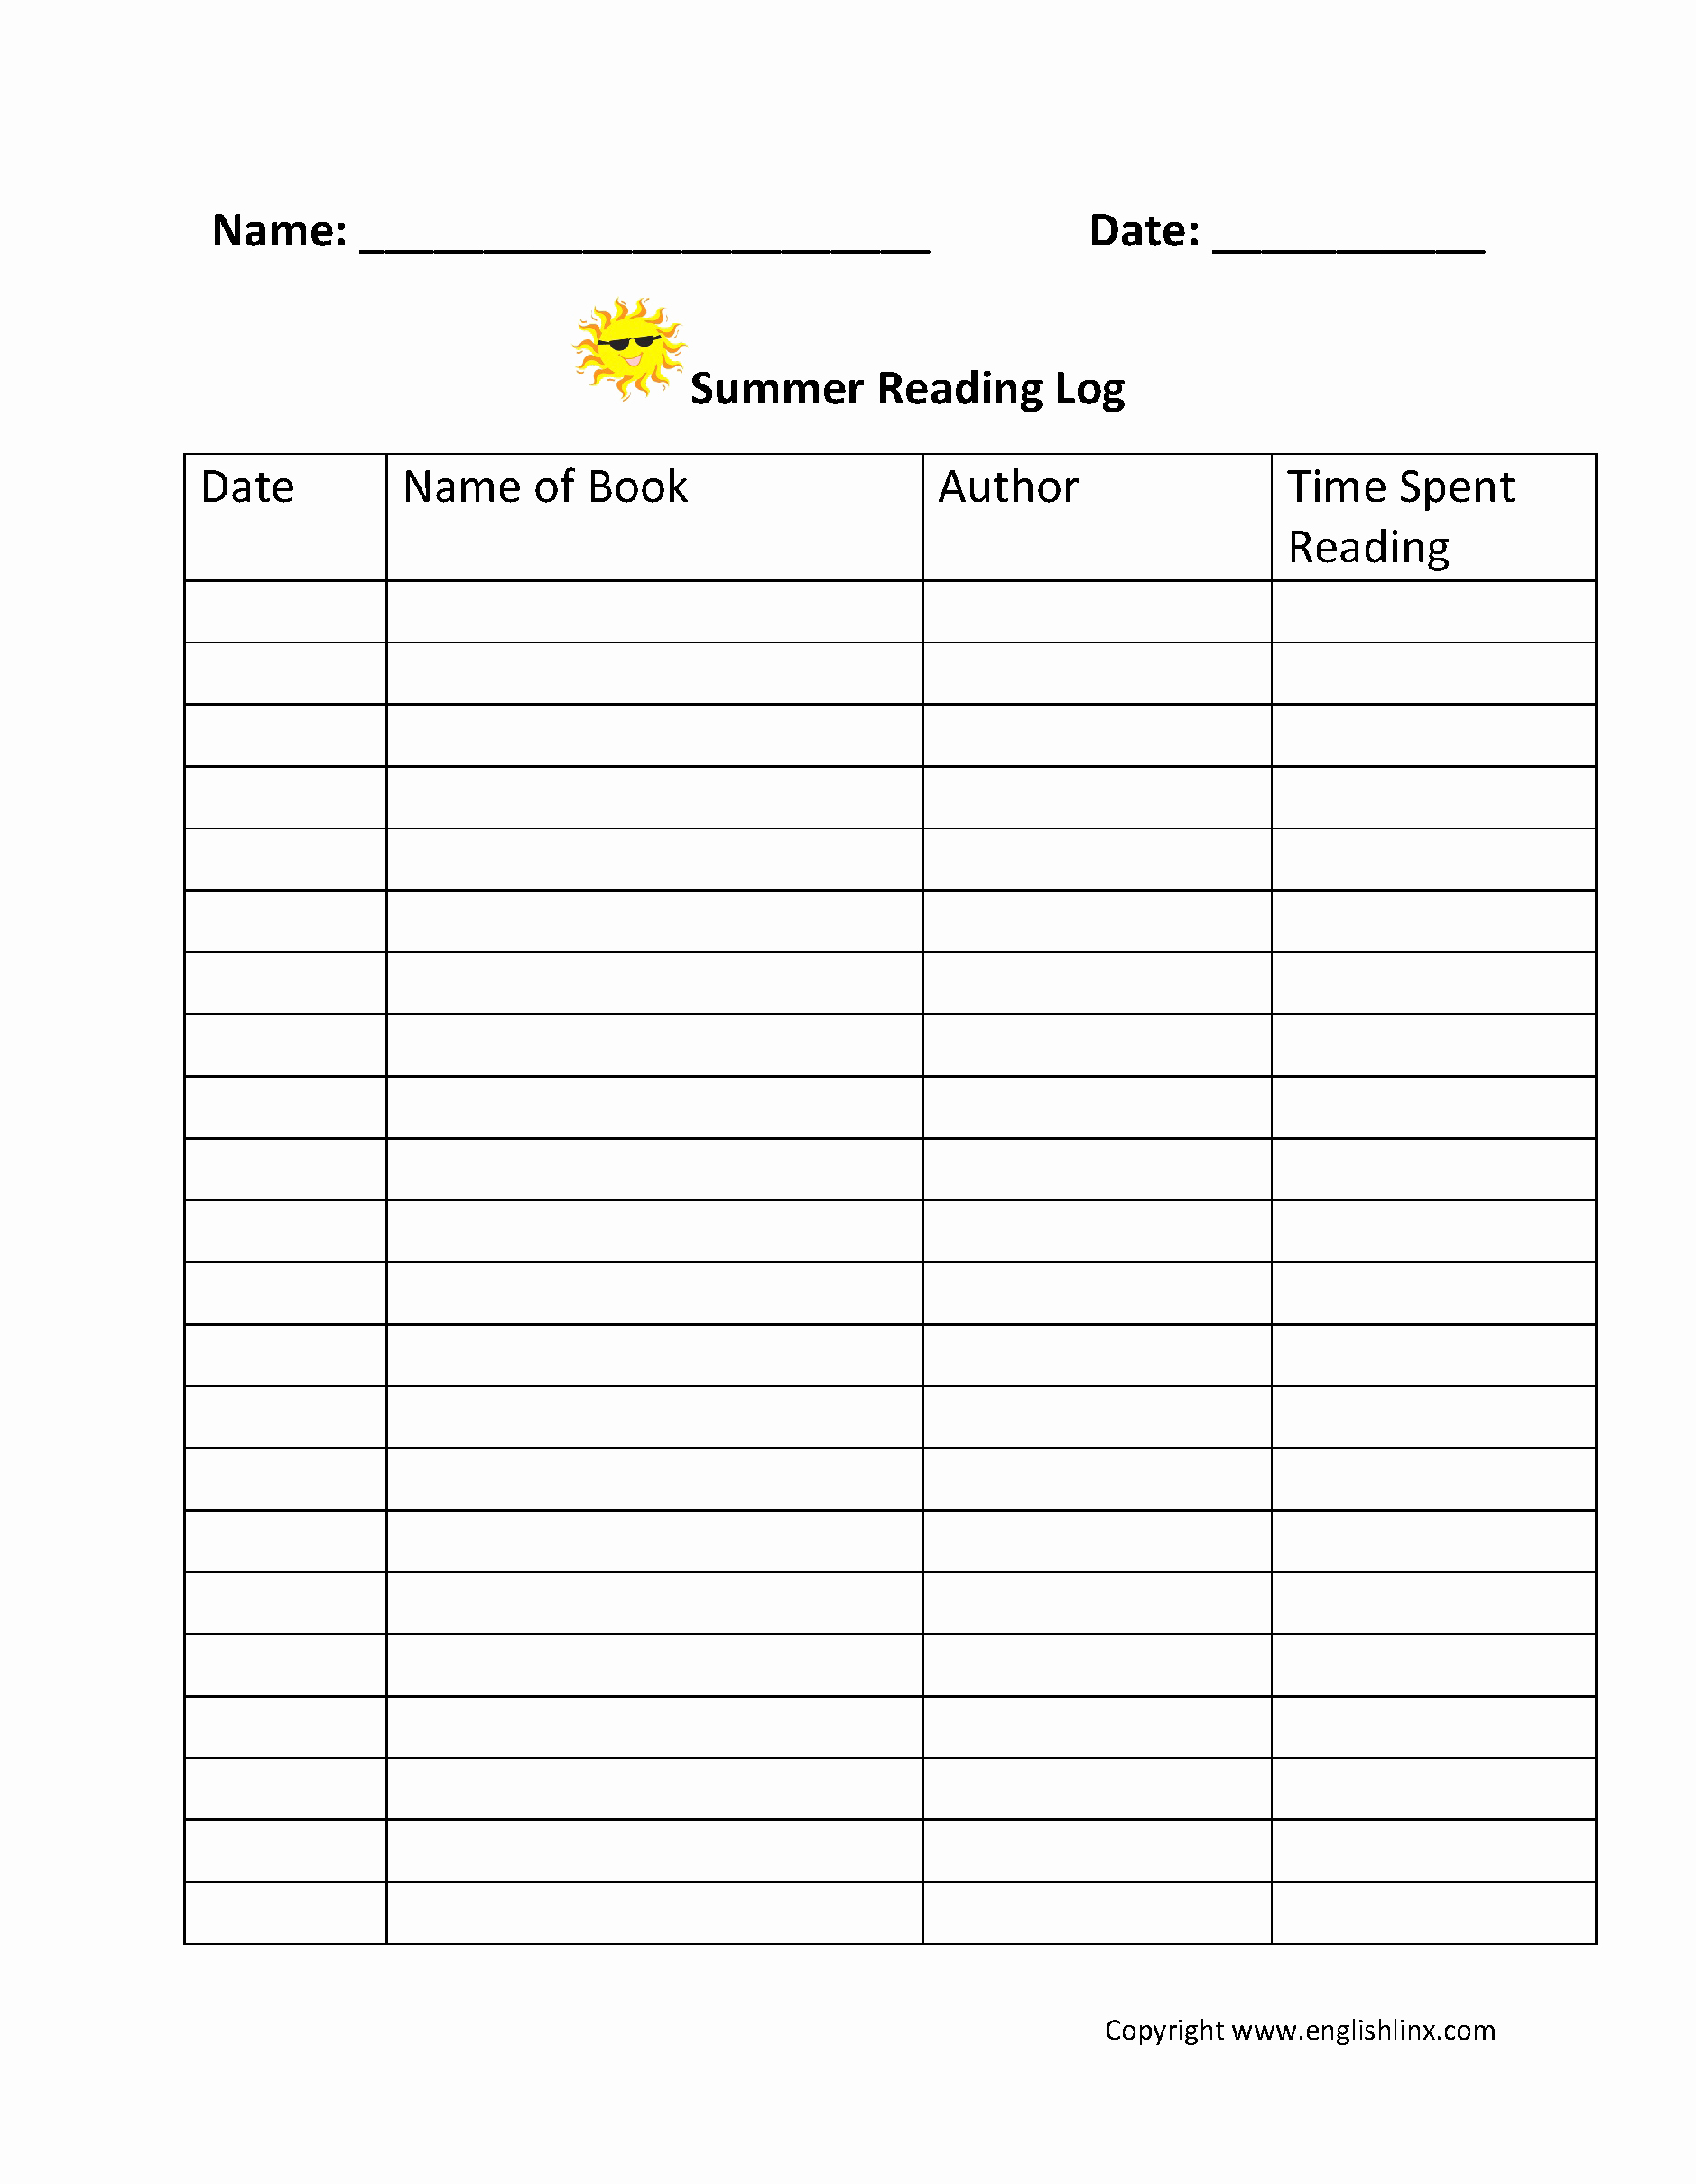 Weekly Reading Log Template New Summer Reading Log Englishlinx Board